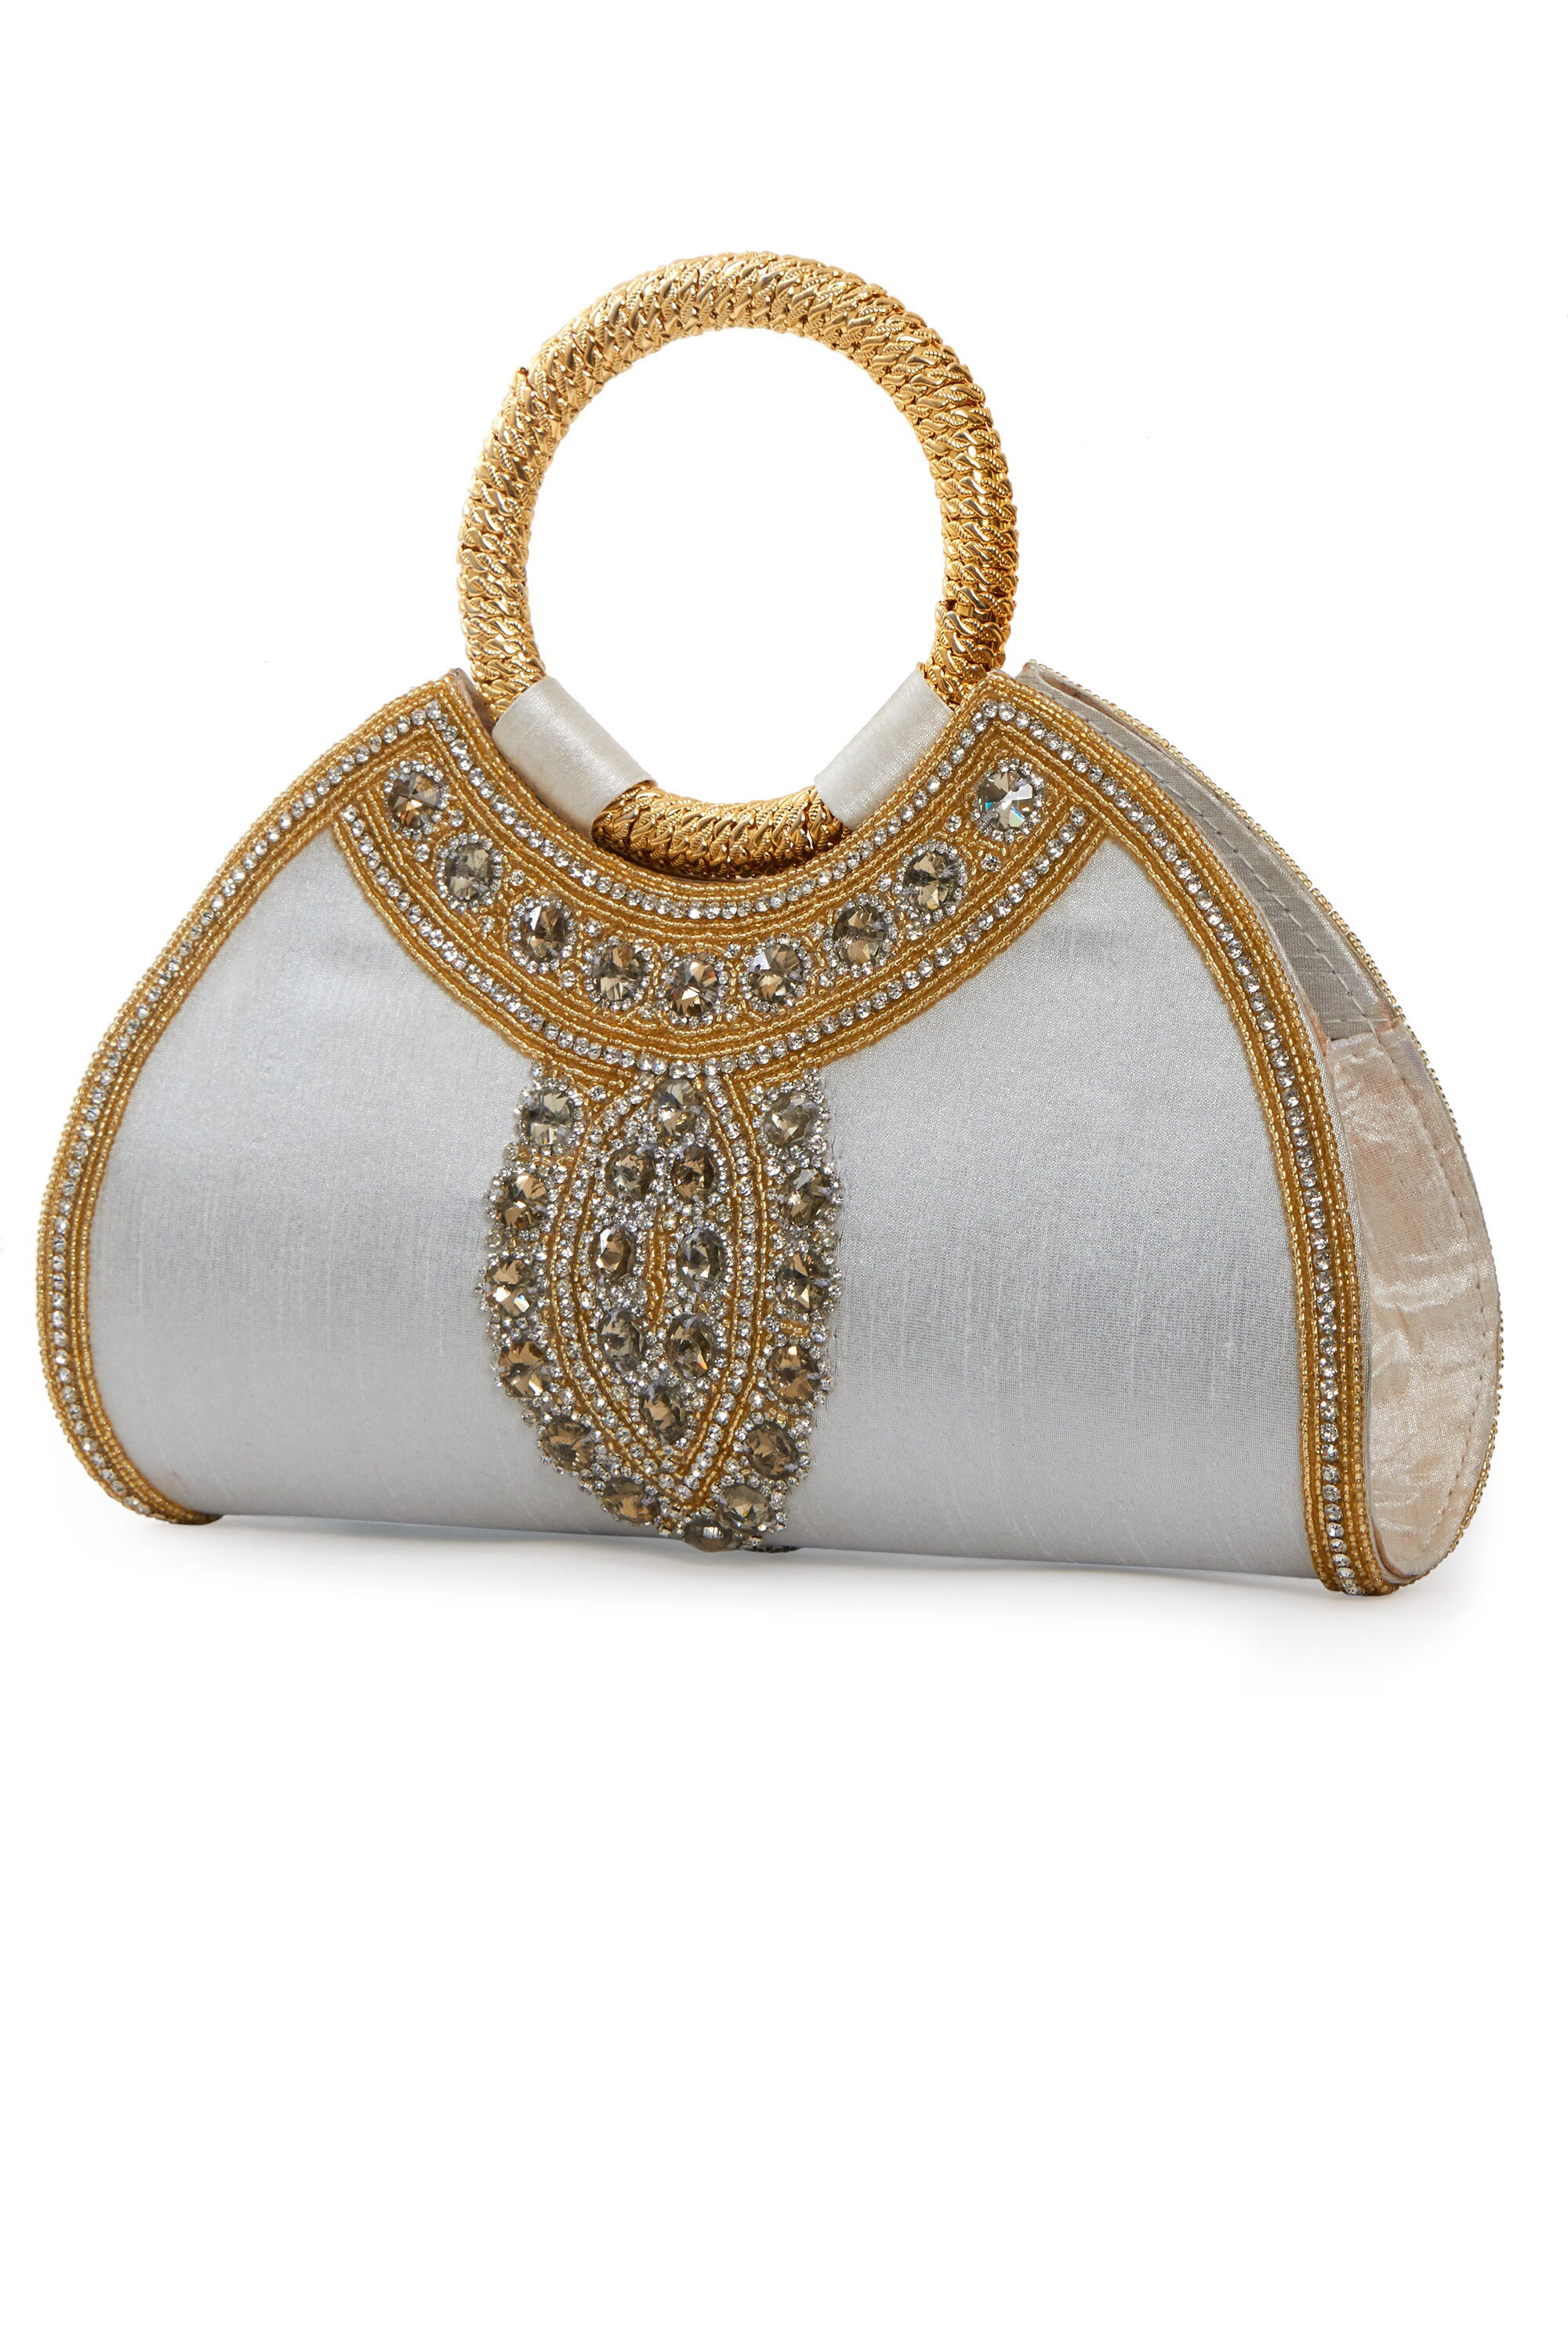 Gold Champagne Vintage Hollow Stones Evening Purse Party Diamond Handbag  Woman Wedding Bridal Bags Banquet Crystal Clutch Bag - AliExpress